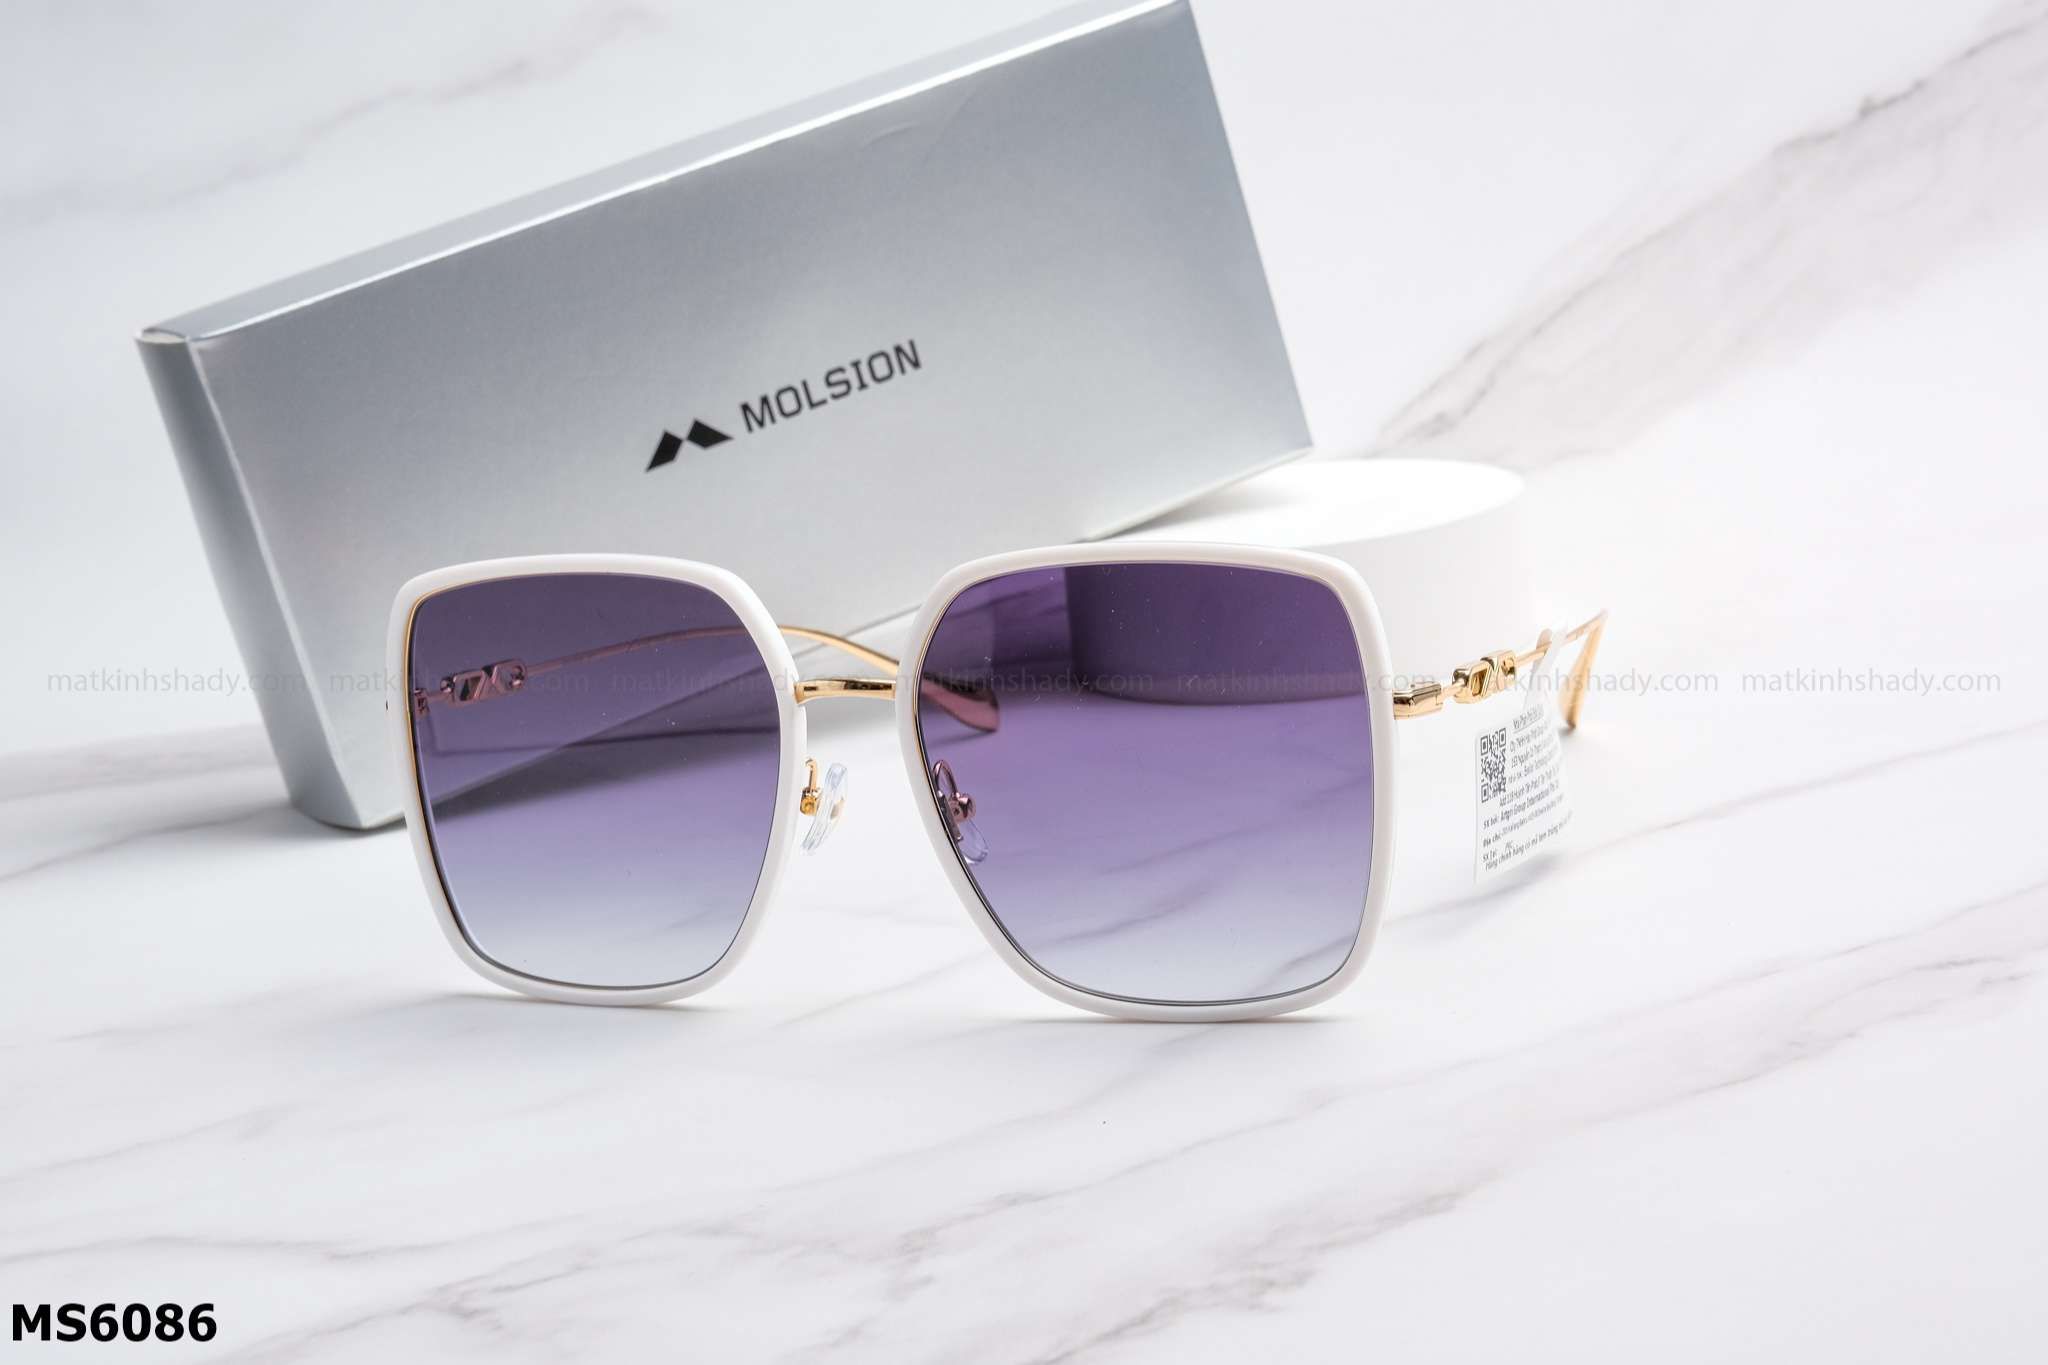  Molsion Eyewear - Sunglasses - MS6086 